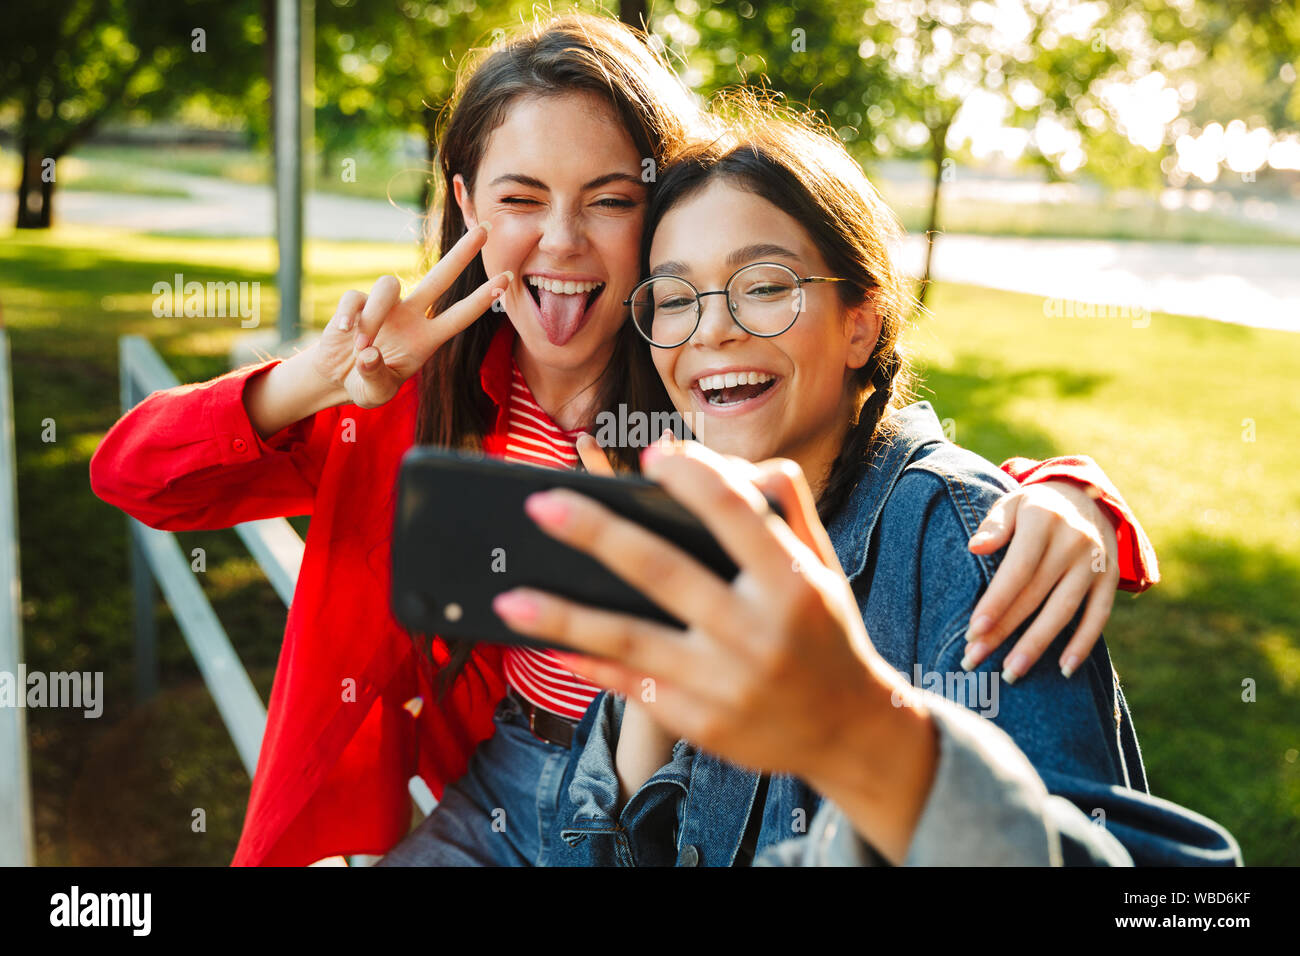 Image de deux étudiants en funny girls photo selfies on cellphone and gesturing while sitting on chanter la paix railing in green park Banque D'Images